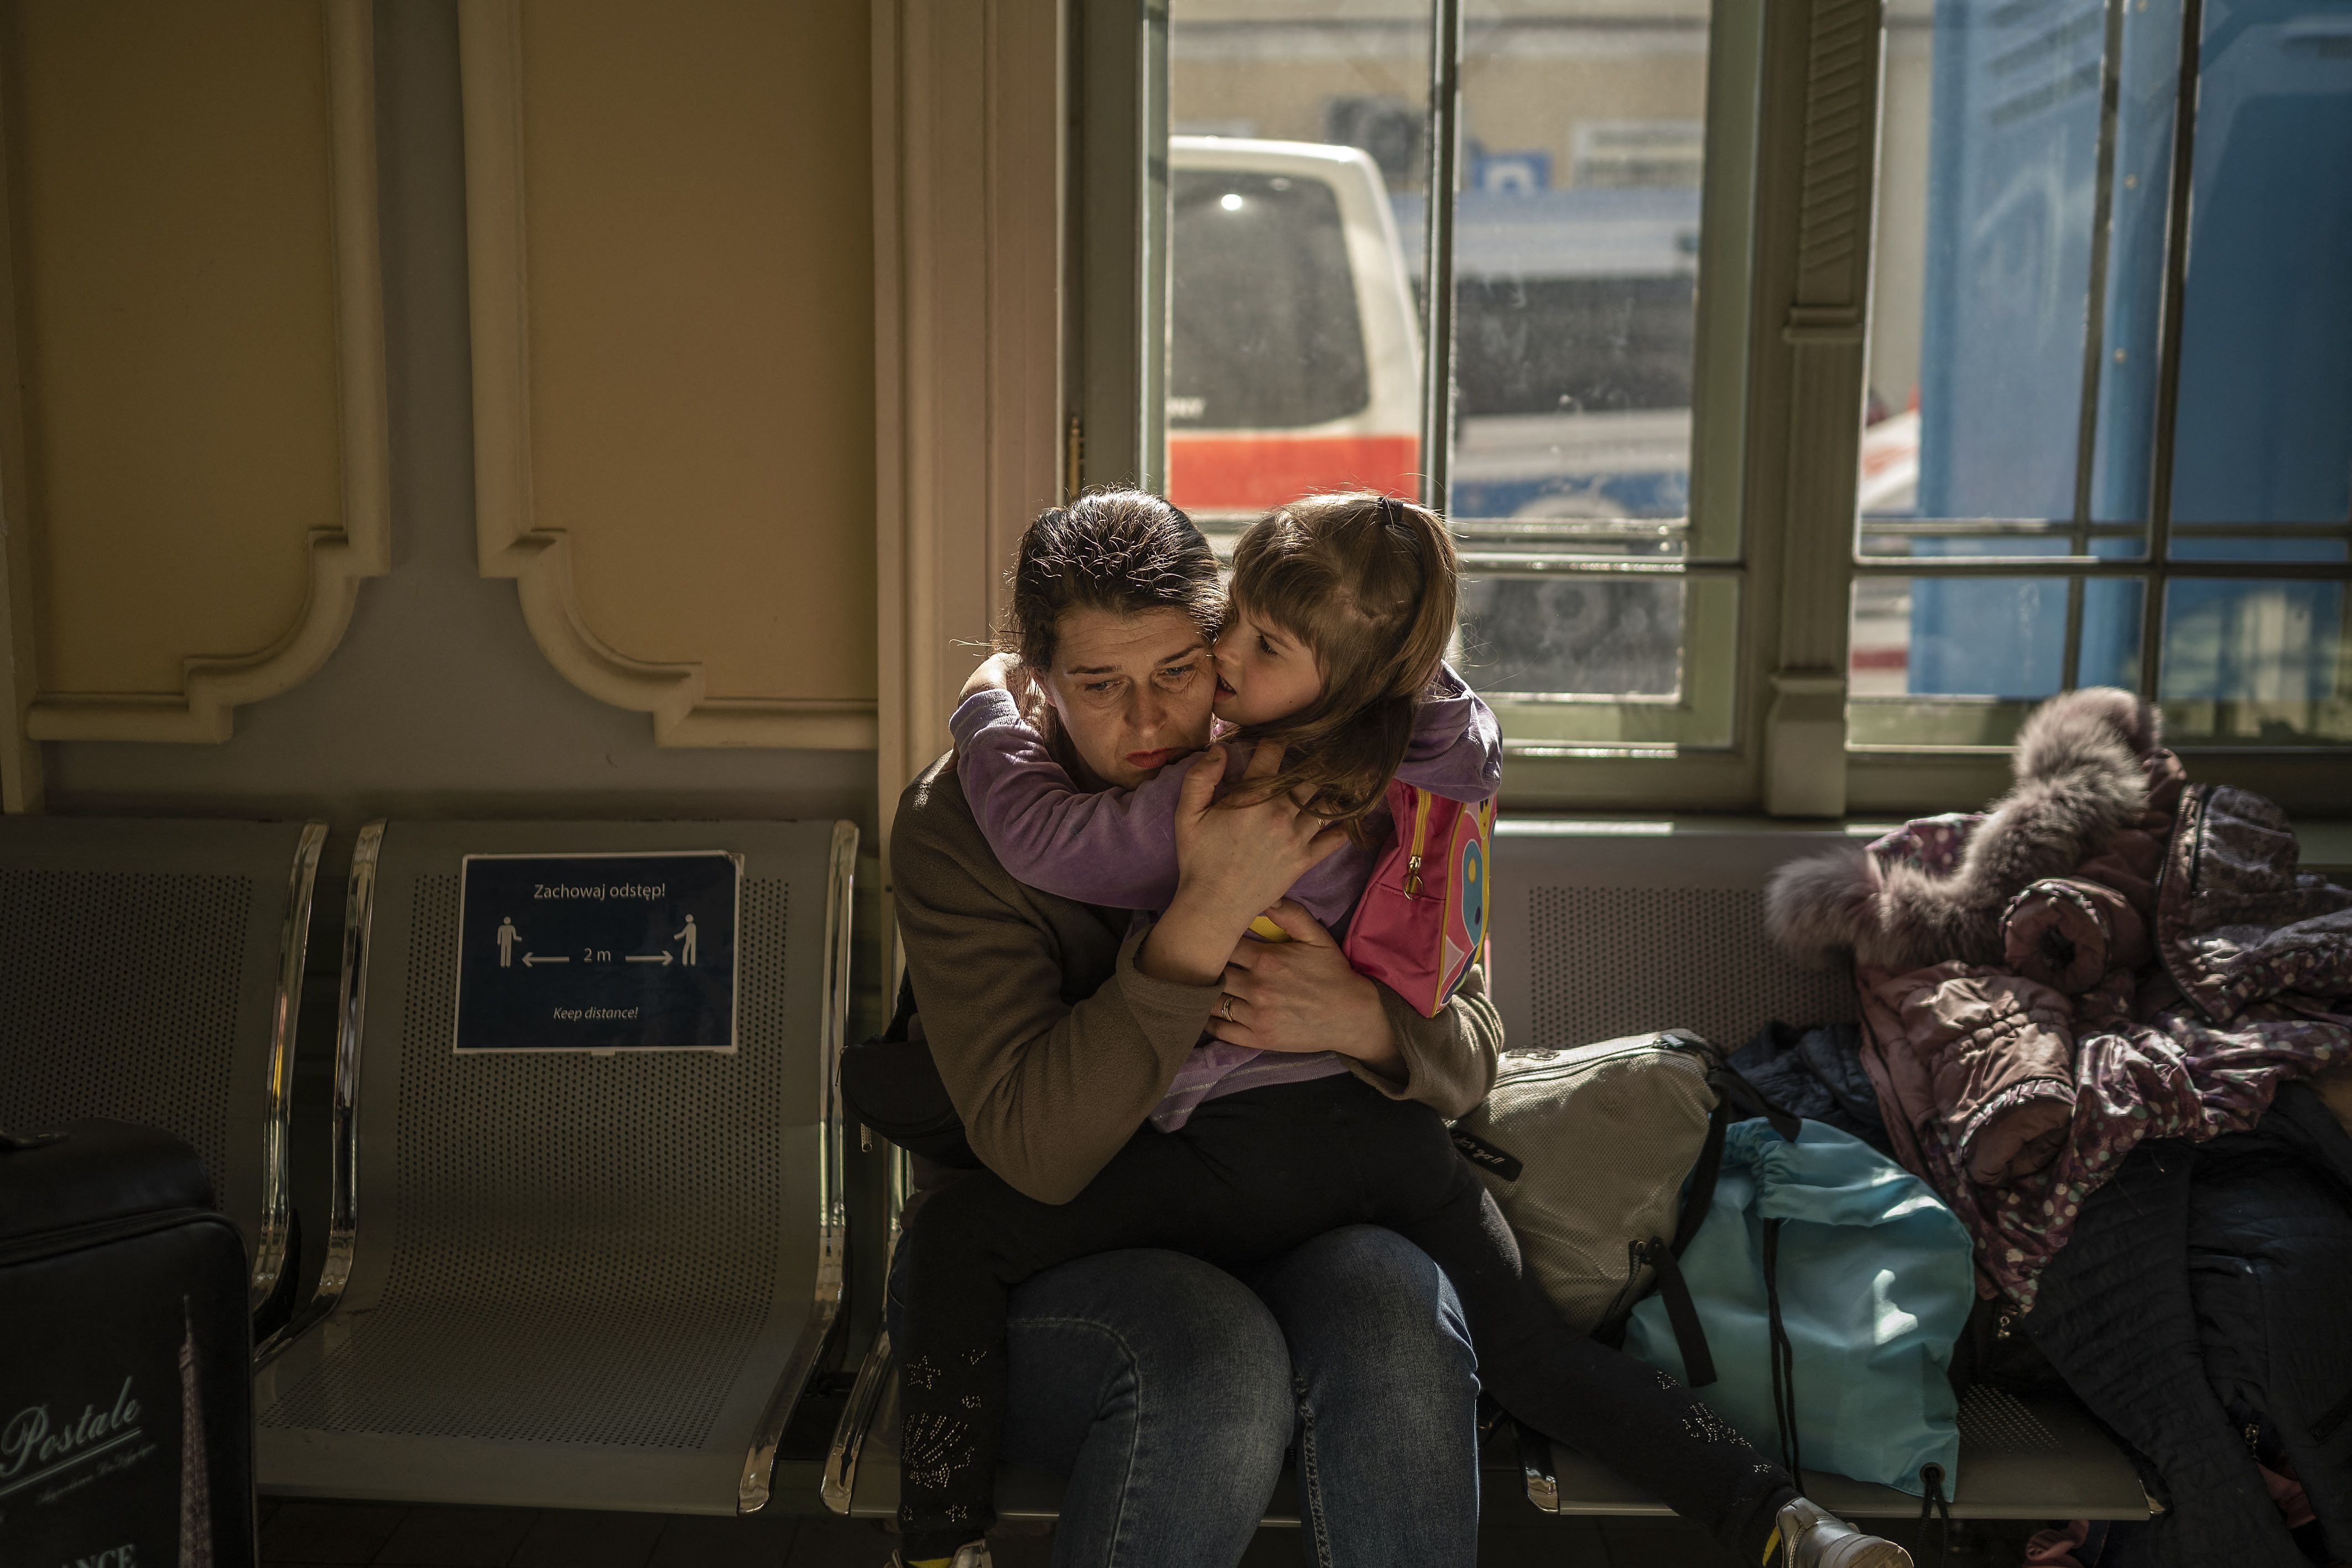 A Ukrainian evacuee hugs a child in the train station in Przemysl, near the Polish-Ukrainian border, on March 22, 2022.